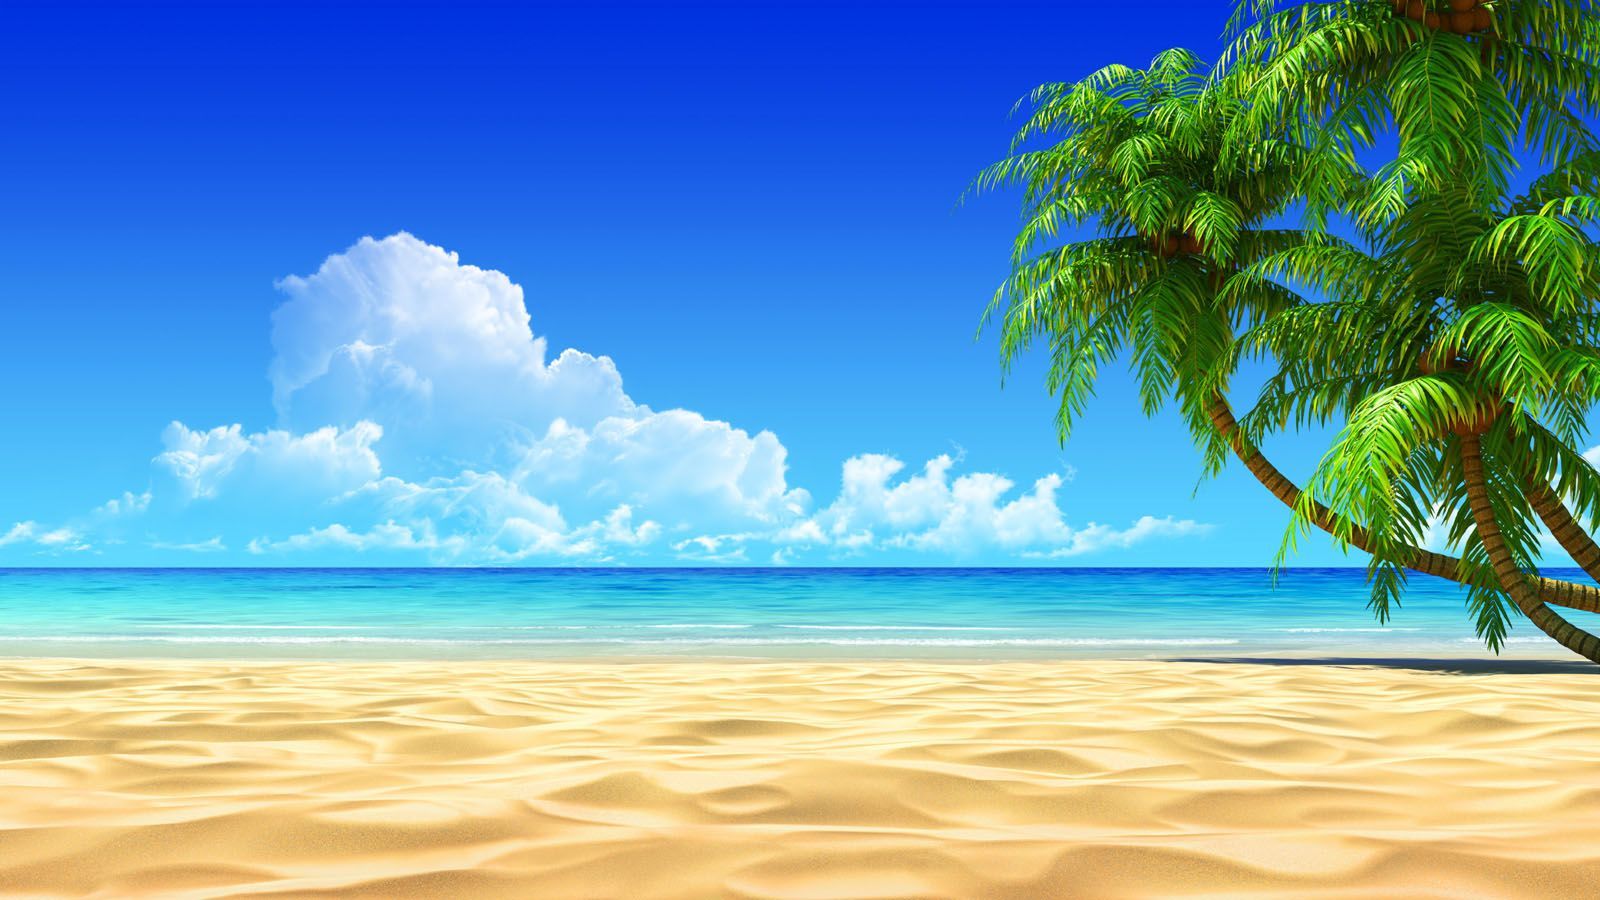 40 Beautiful Beach Wallpapers for your desktop